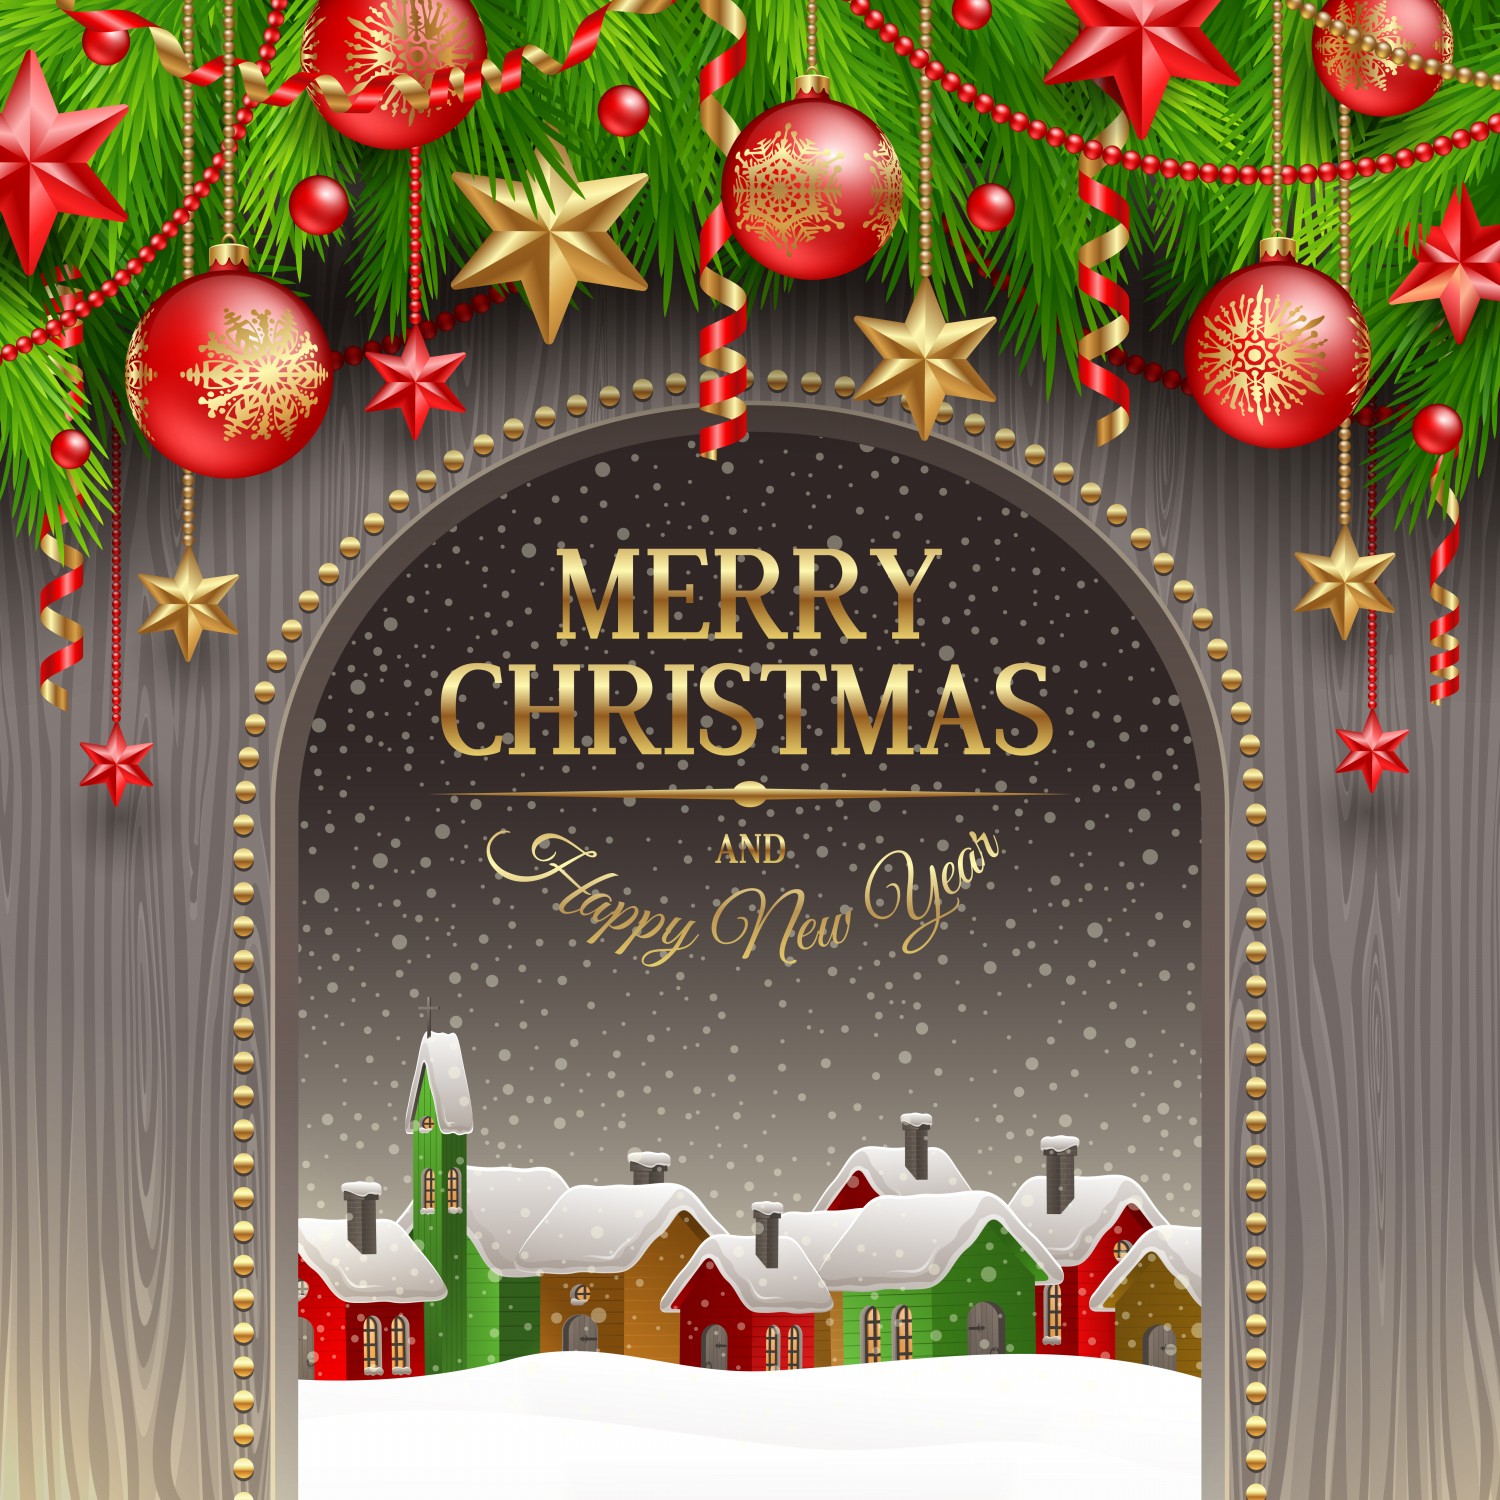 Allegato FREE-Christmas-Tree-Lights-Greeting-Cards-2.jpg